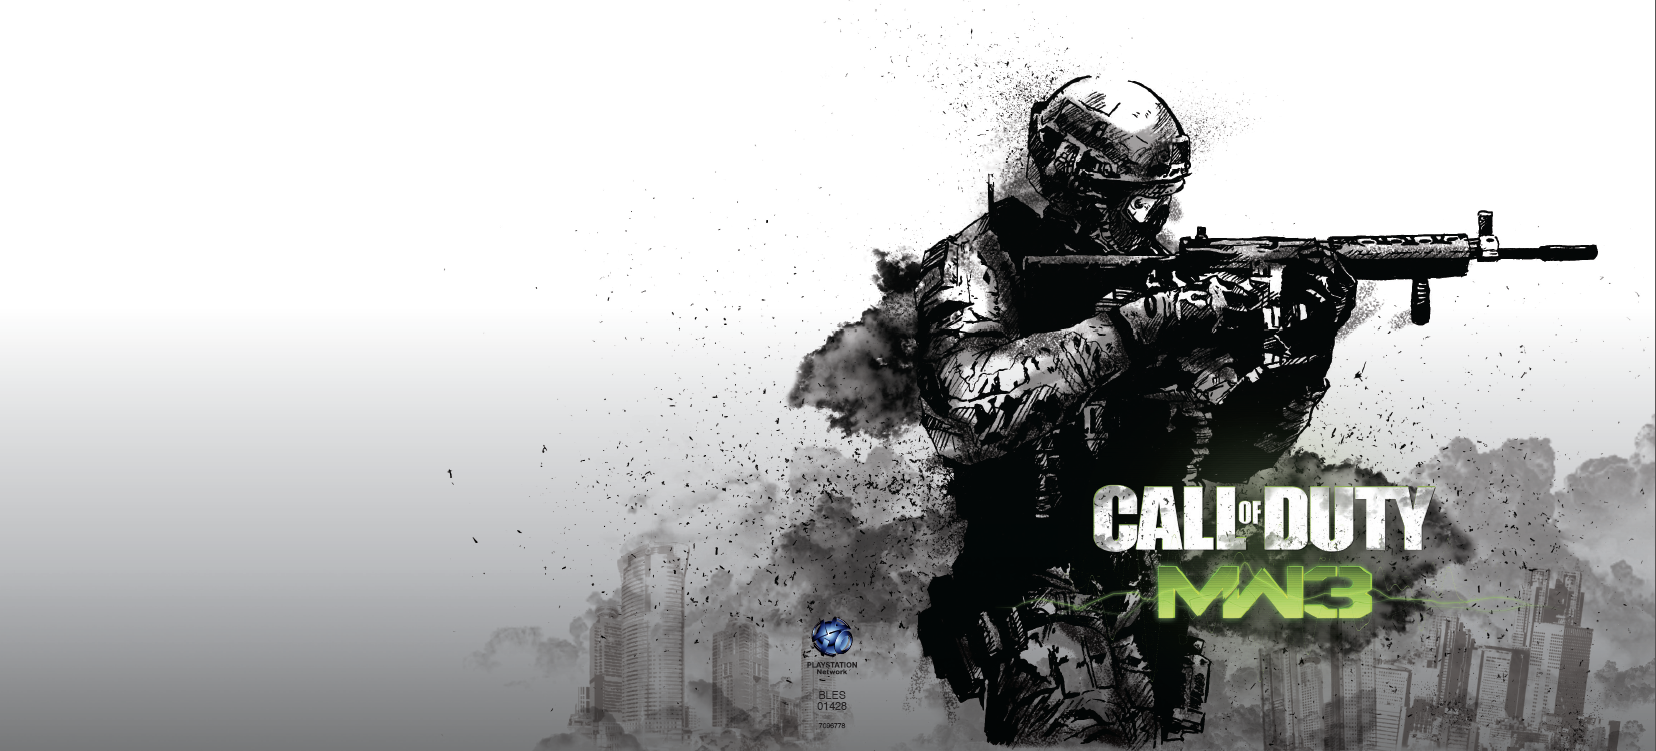 Call Of Duty MW3 Wallpaper Desktop HD - Wallpapers